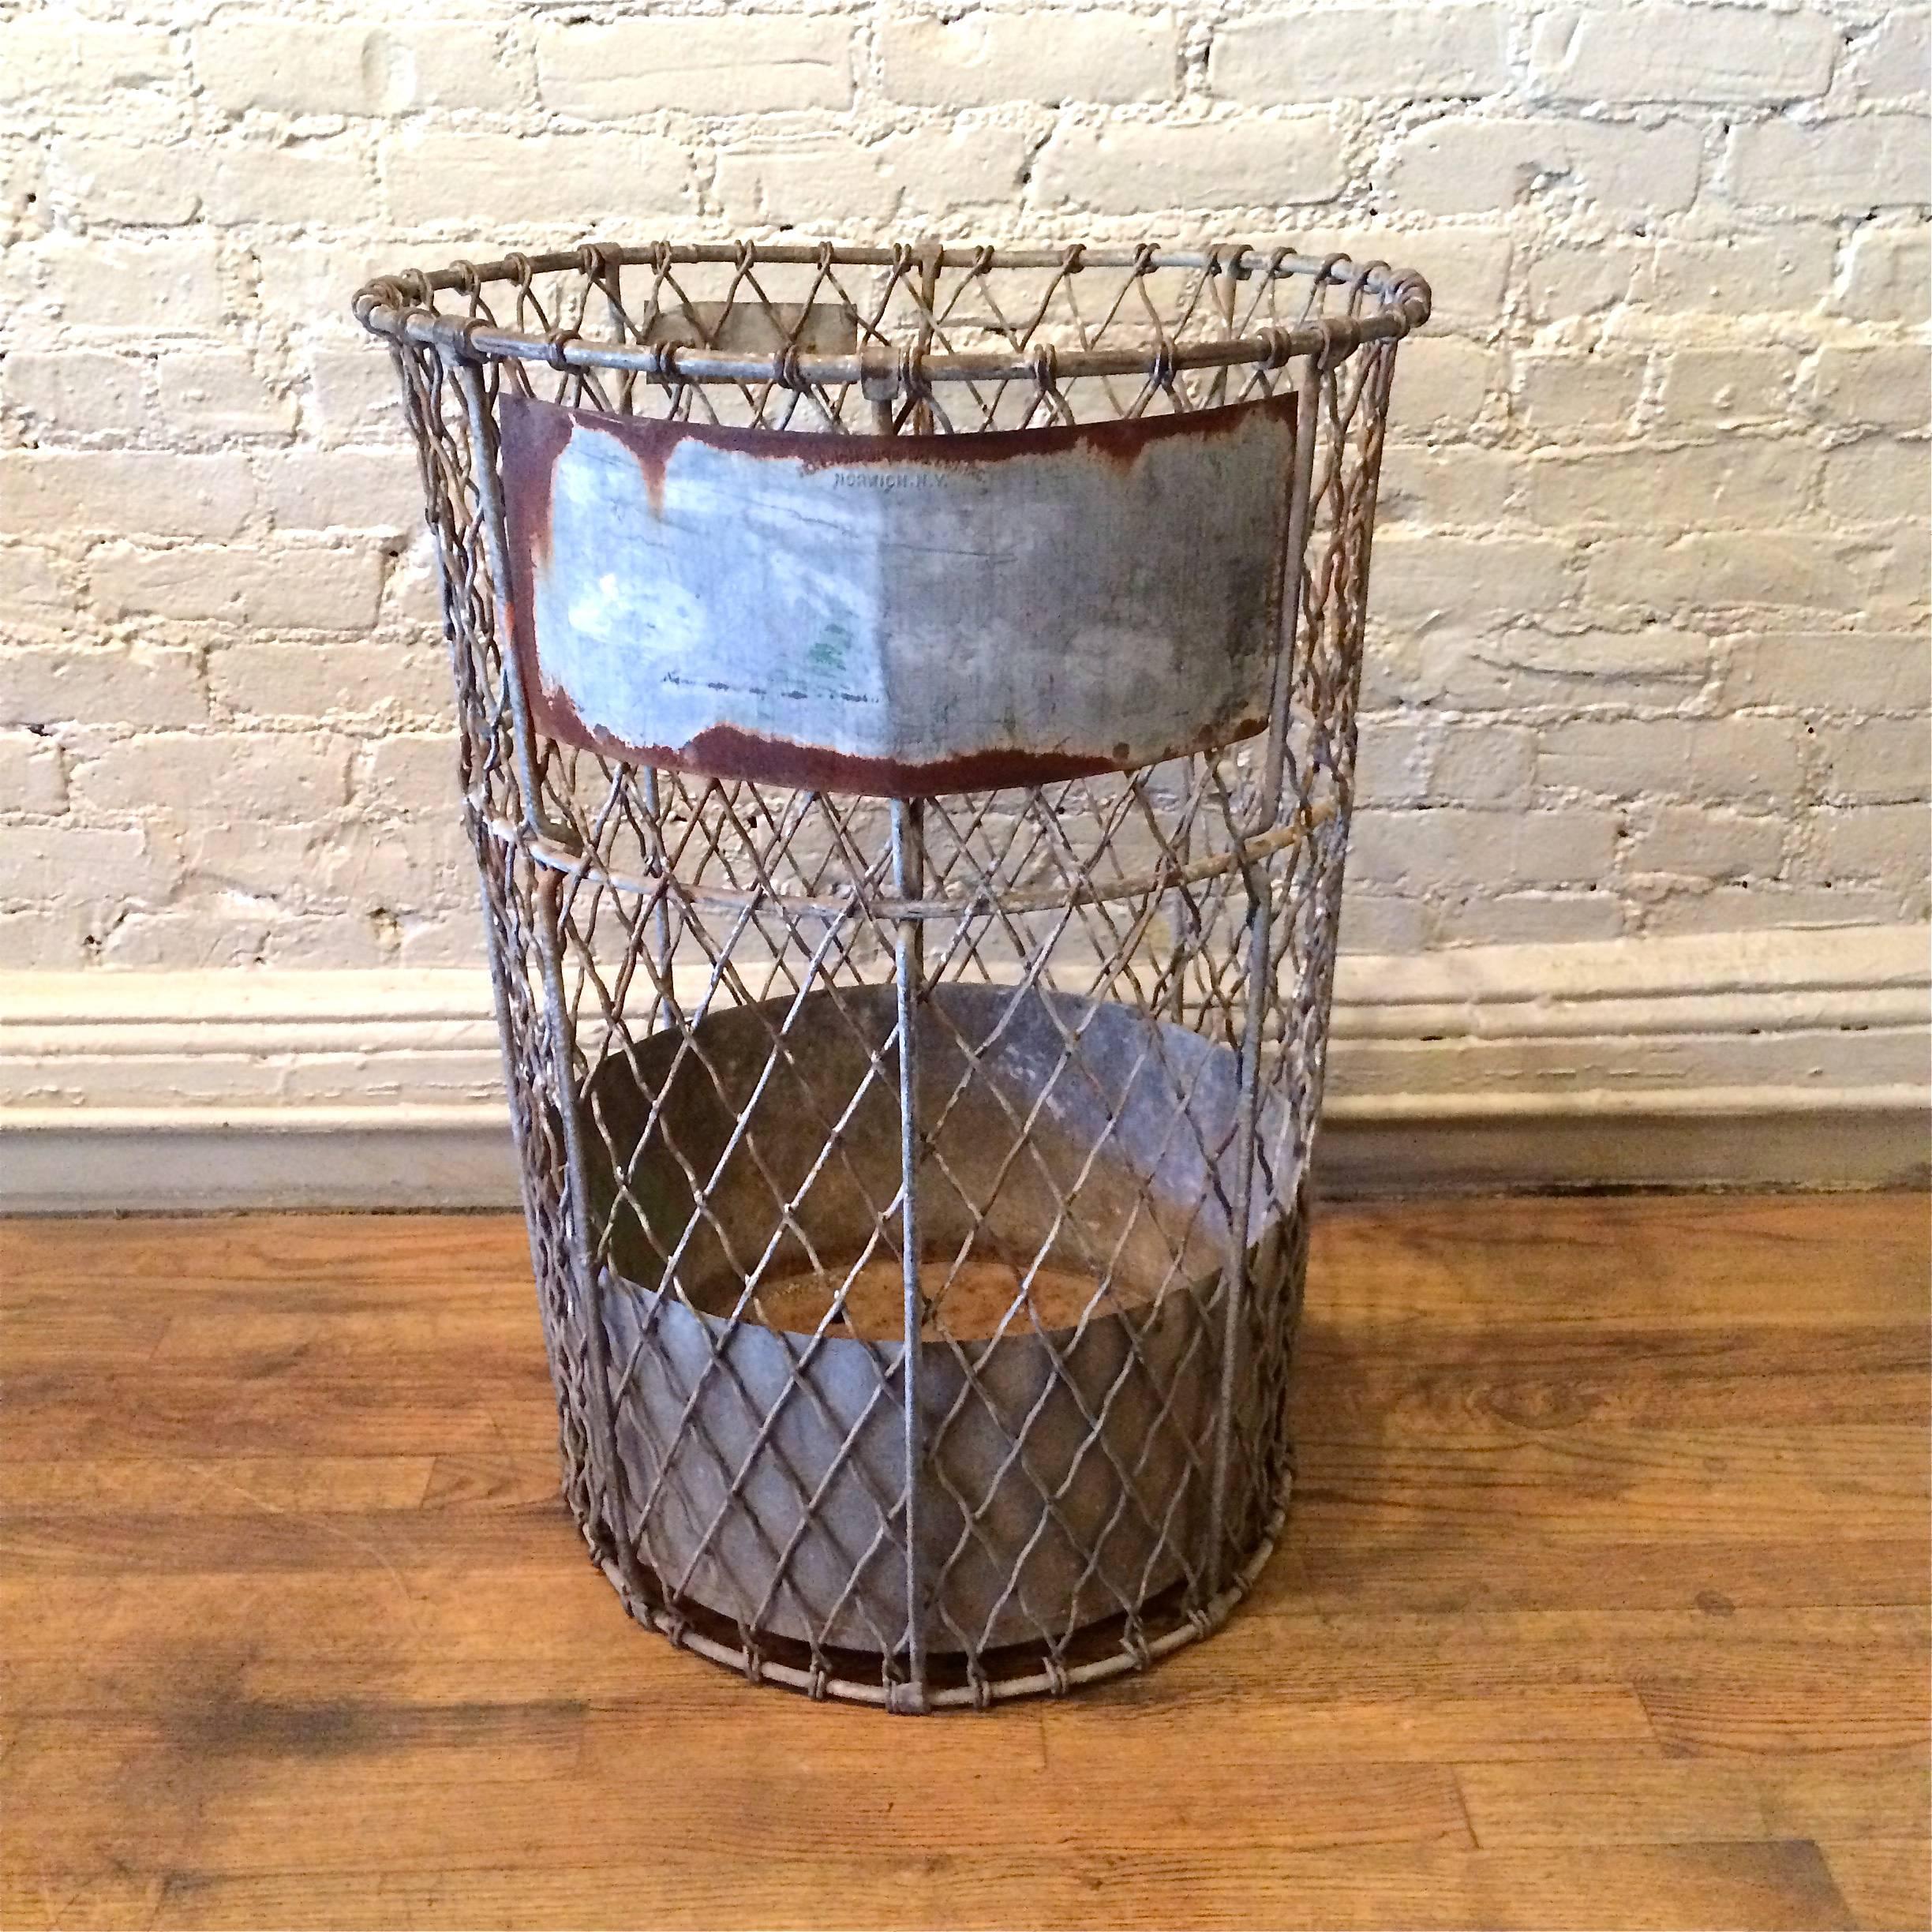 Tall, industrial, heavy gauge, galvanized steel, metal mesh, waste basket by Norwich Wire Works, Inc., Norwich NY.